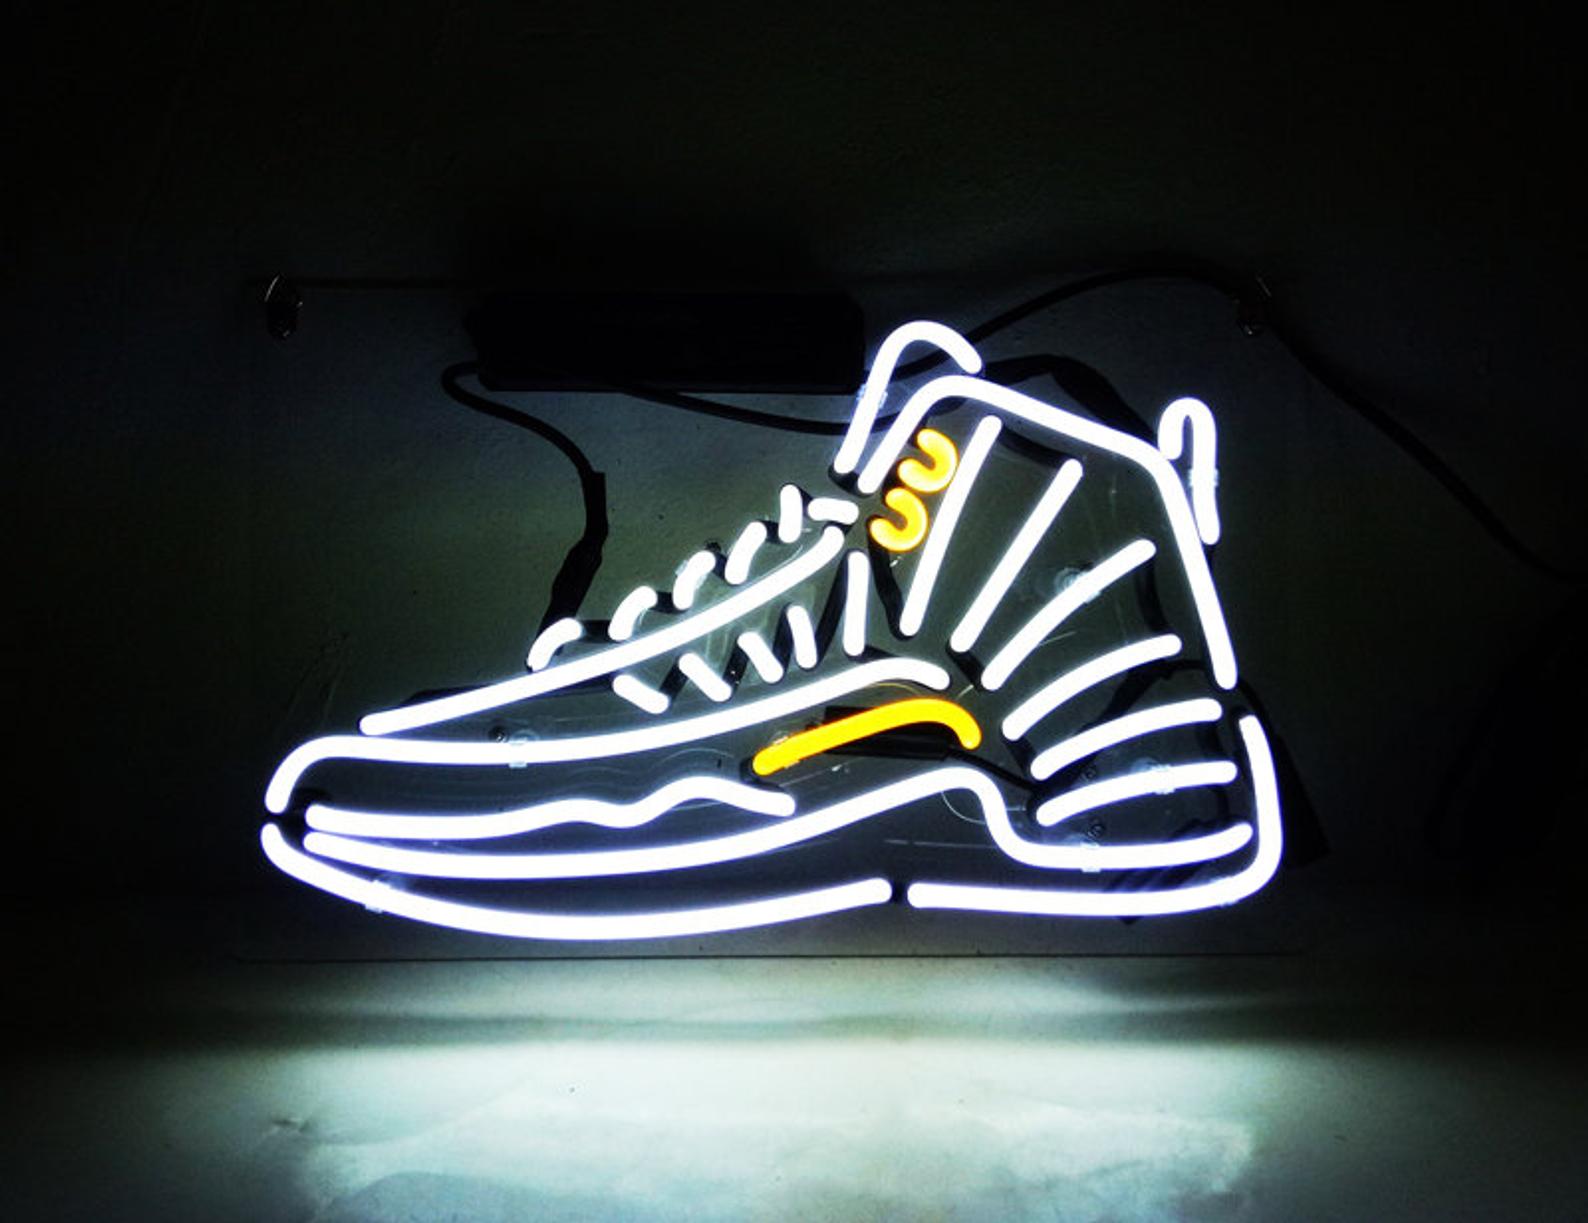 Sneaker neon sign - LED light neon sign lamp size 25 inch | eBay